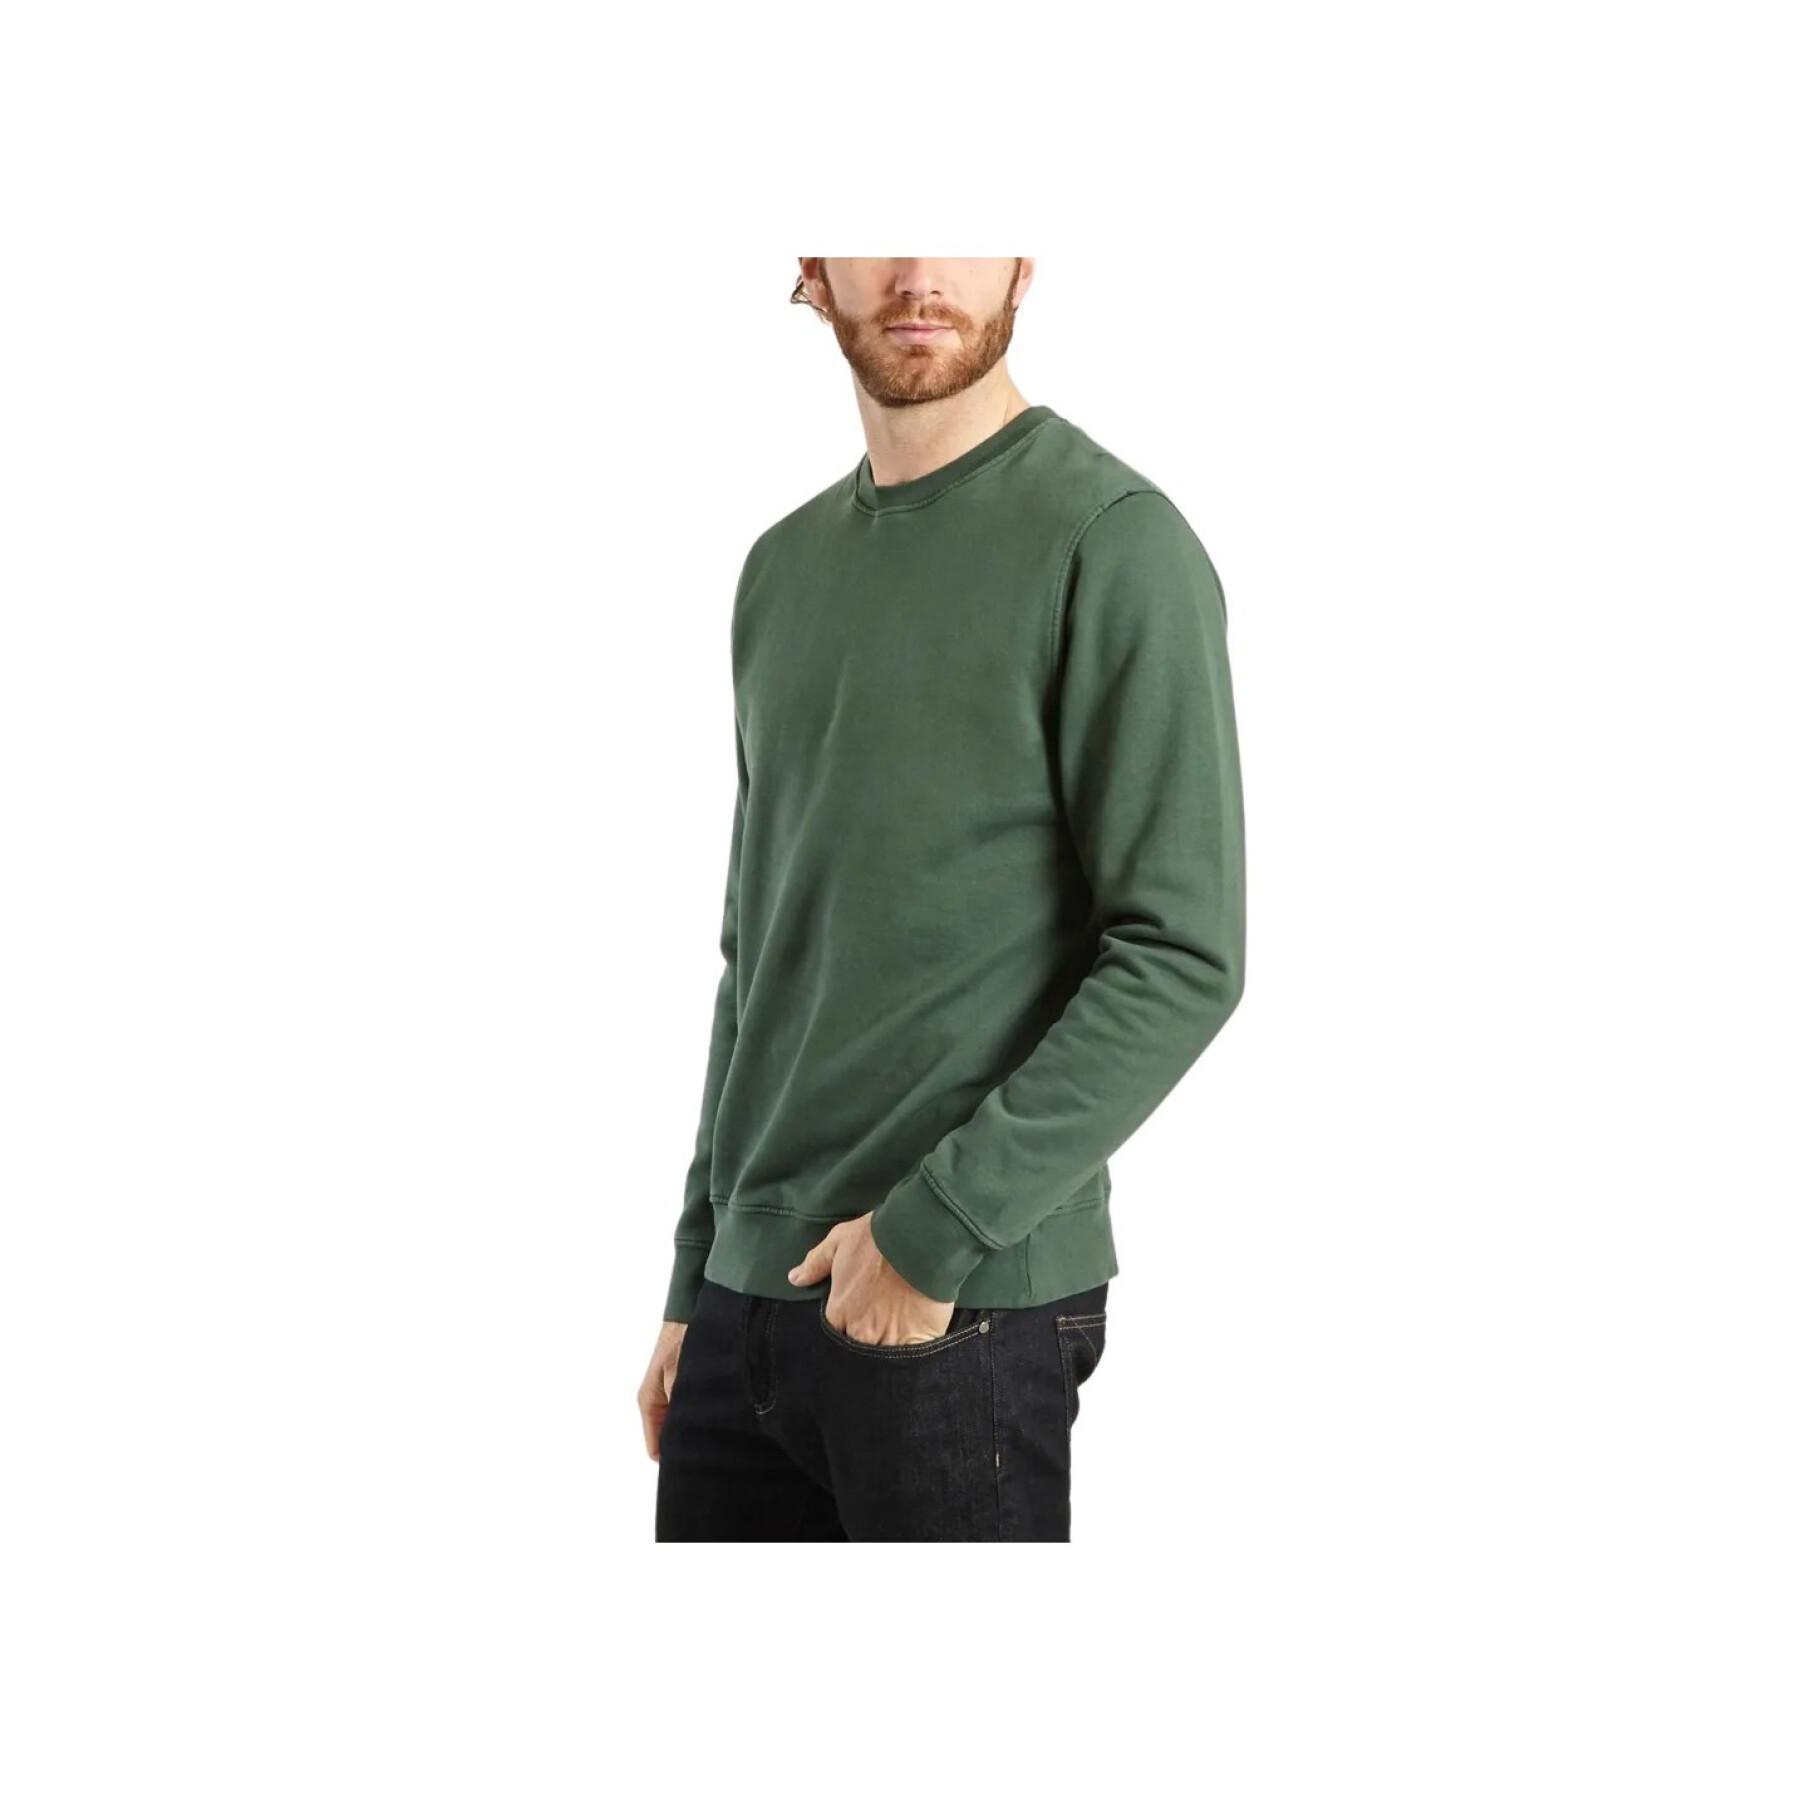 Sweatshirt med rund halsringning Colorful Standard Classic Organic emerald green